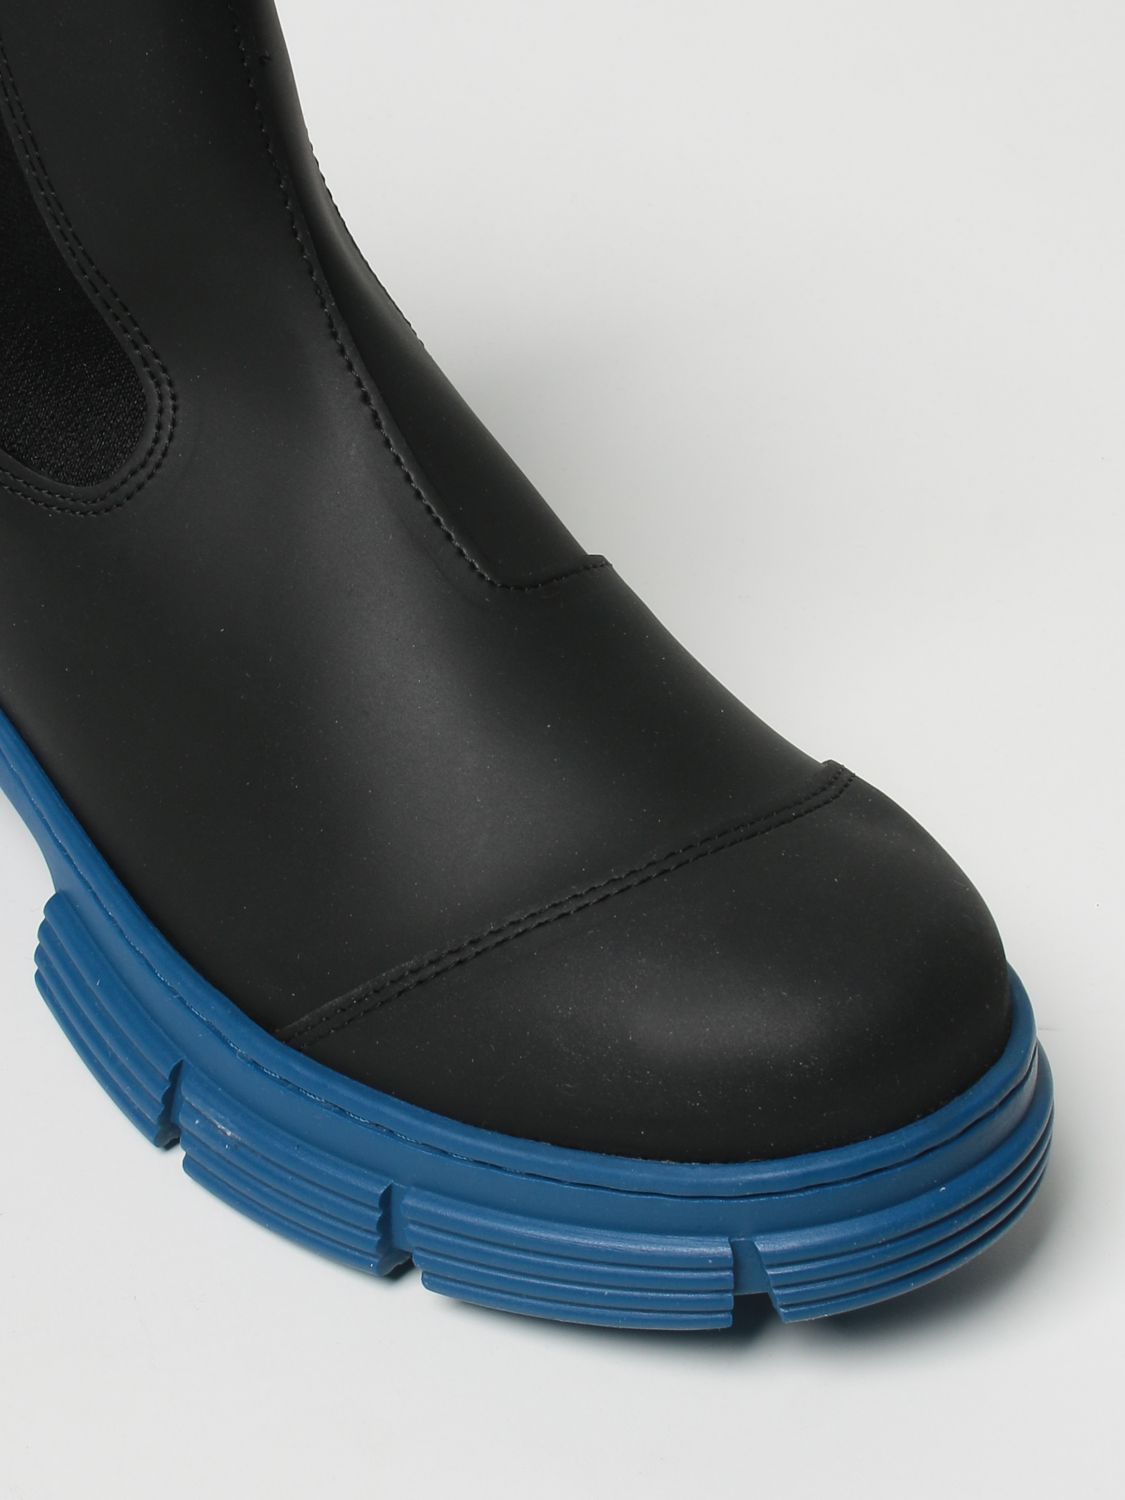 Botines planos Ganni: Zapatos mujer Ganni azul oscuro 4